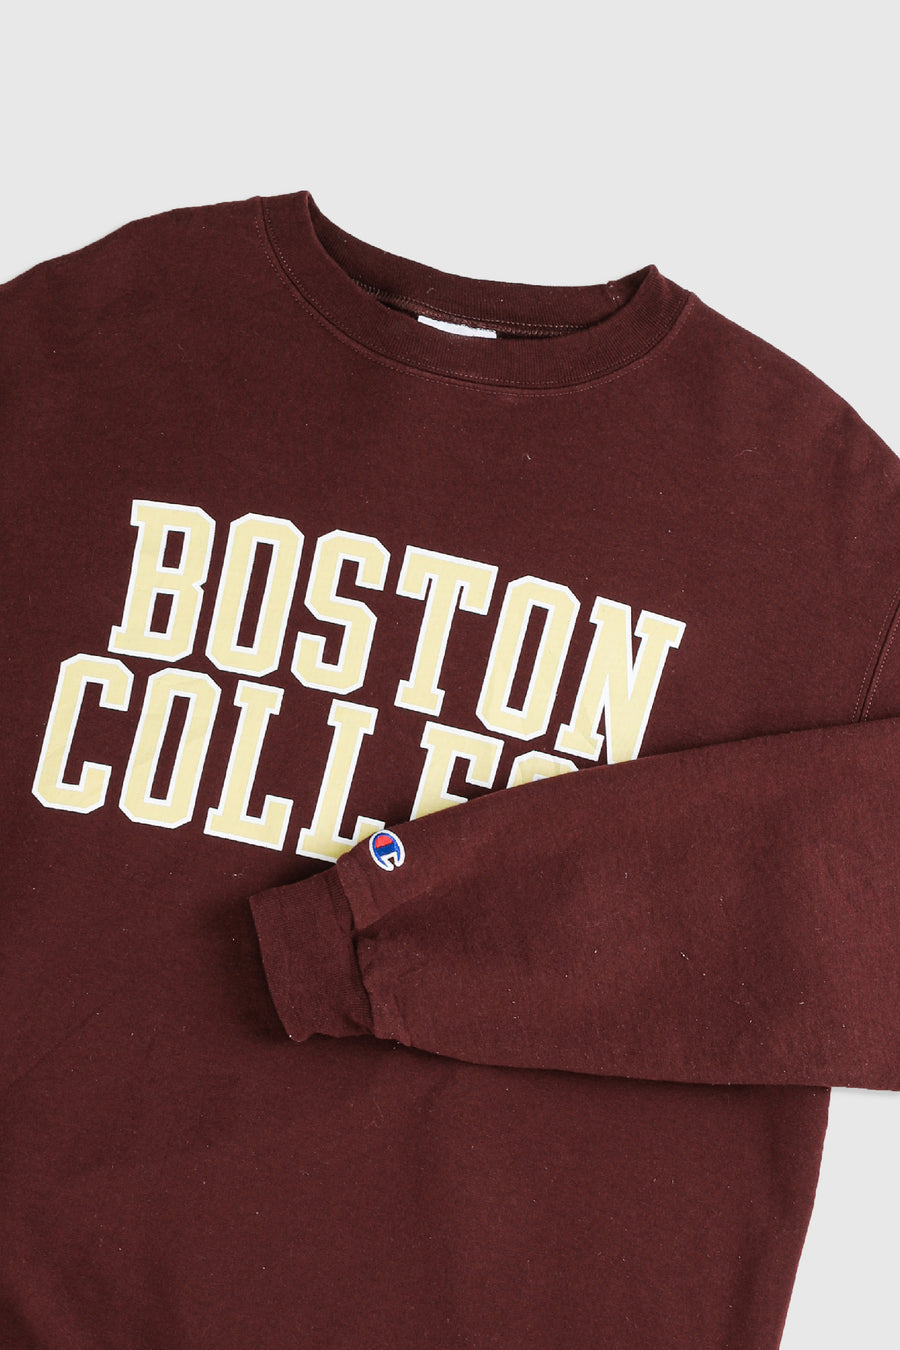 Vintage Boston College Sweatshirt